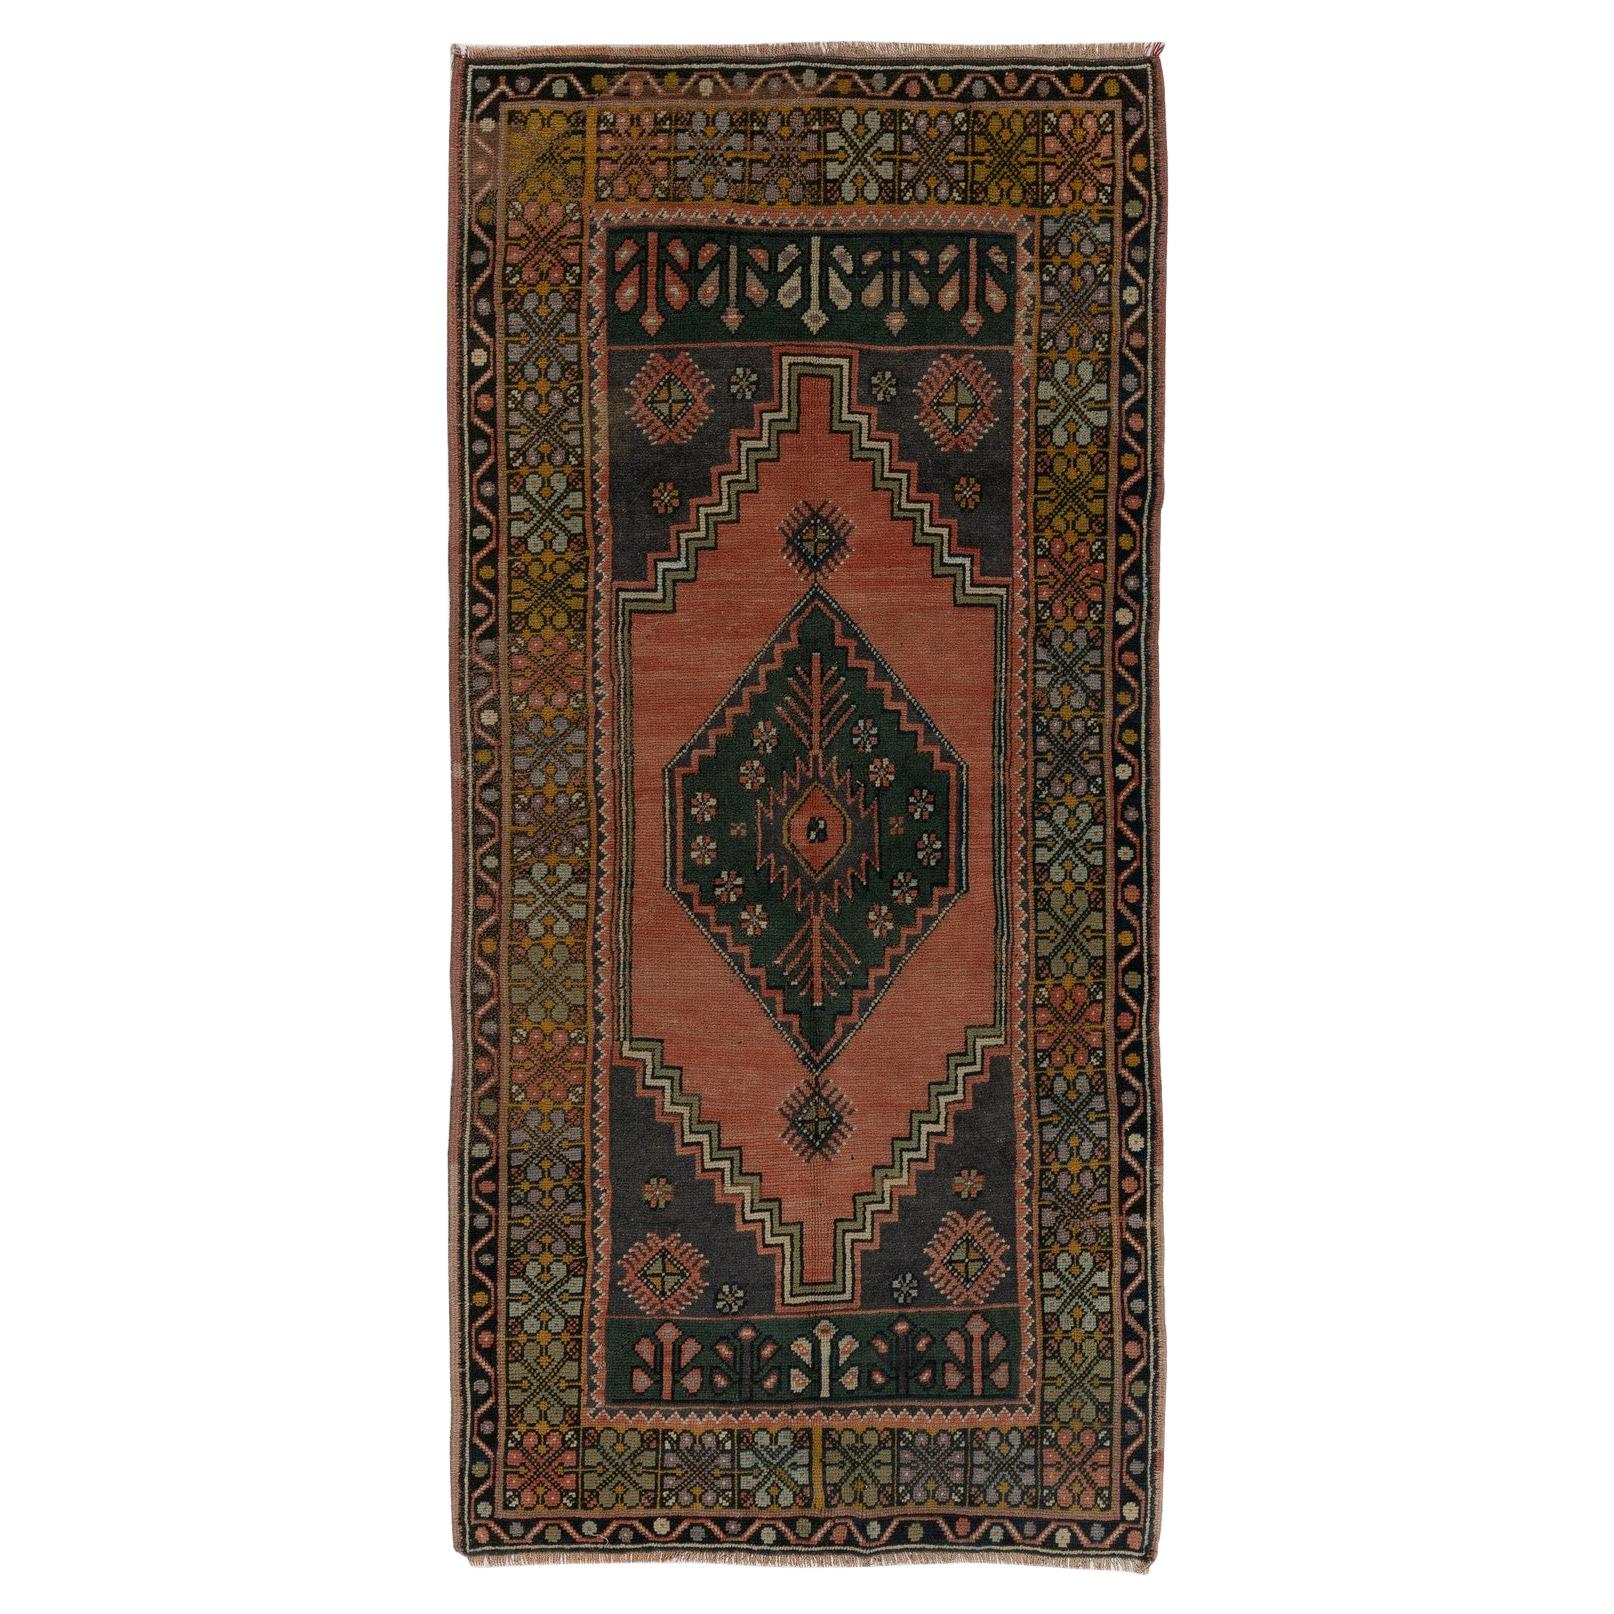 3.5x7 Ft Traditional Handmade Vintage Turkish Tribal Rug, Woolen Floor Covering